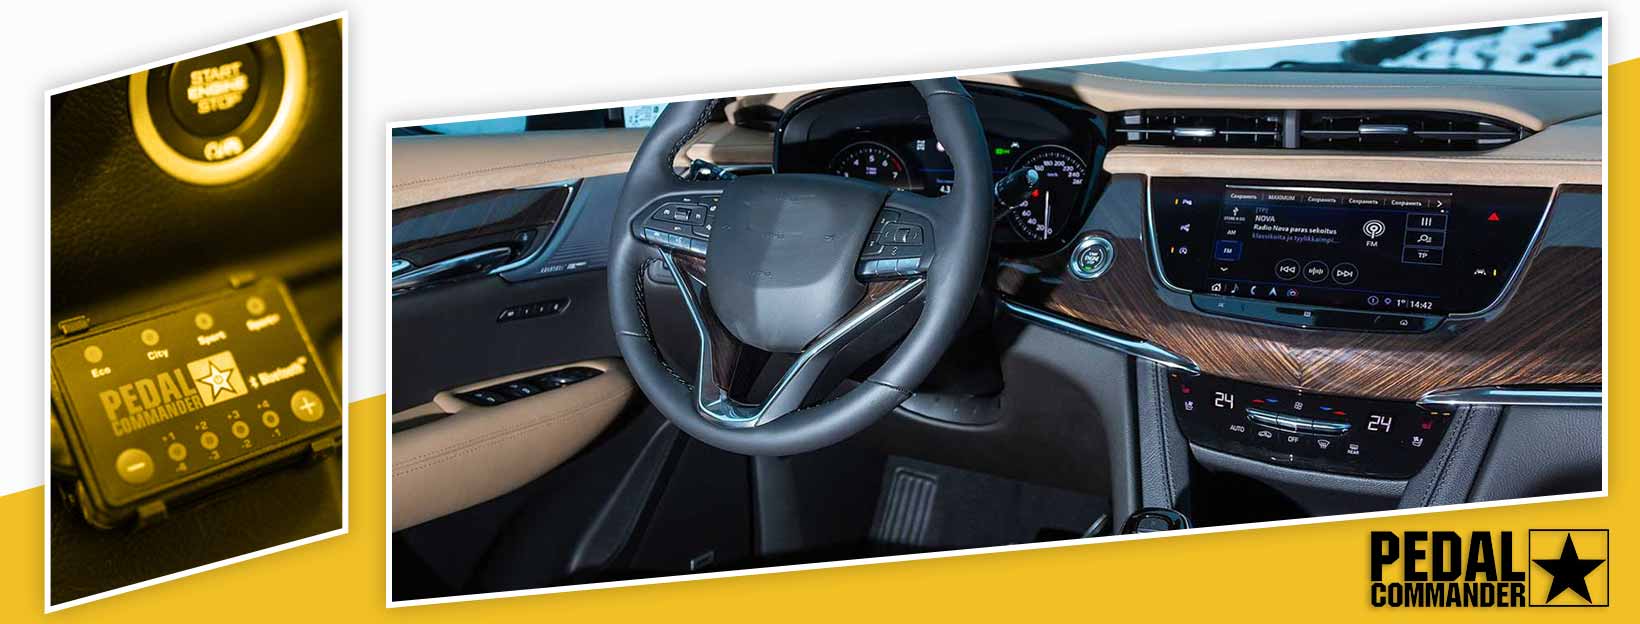 Pedal Commander for Cadillac XT6 - interior